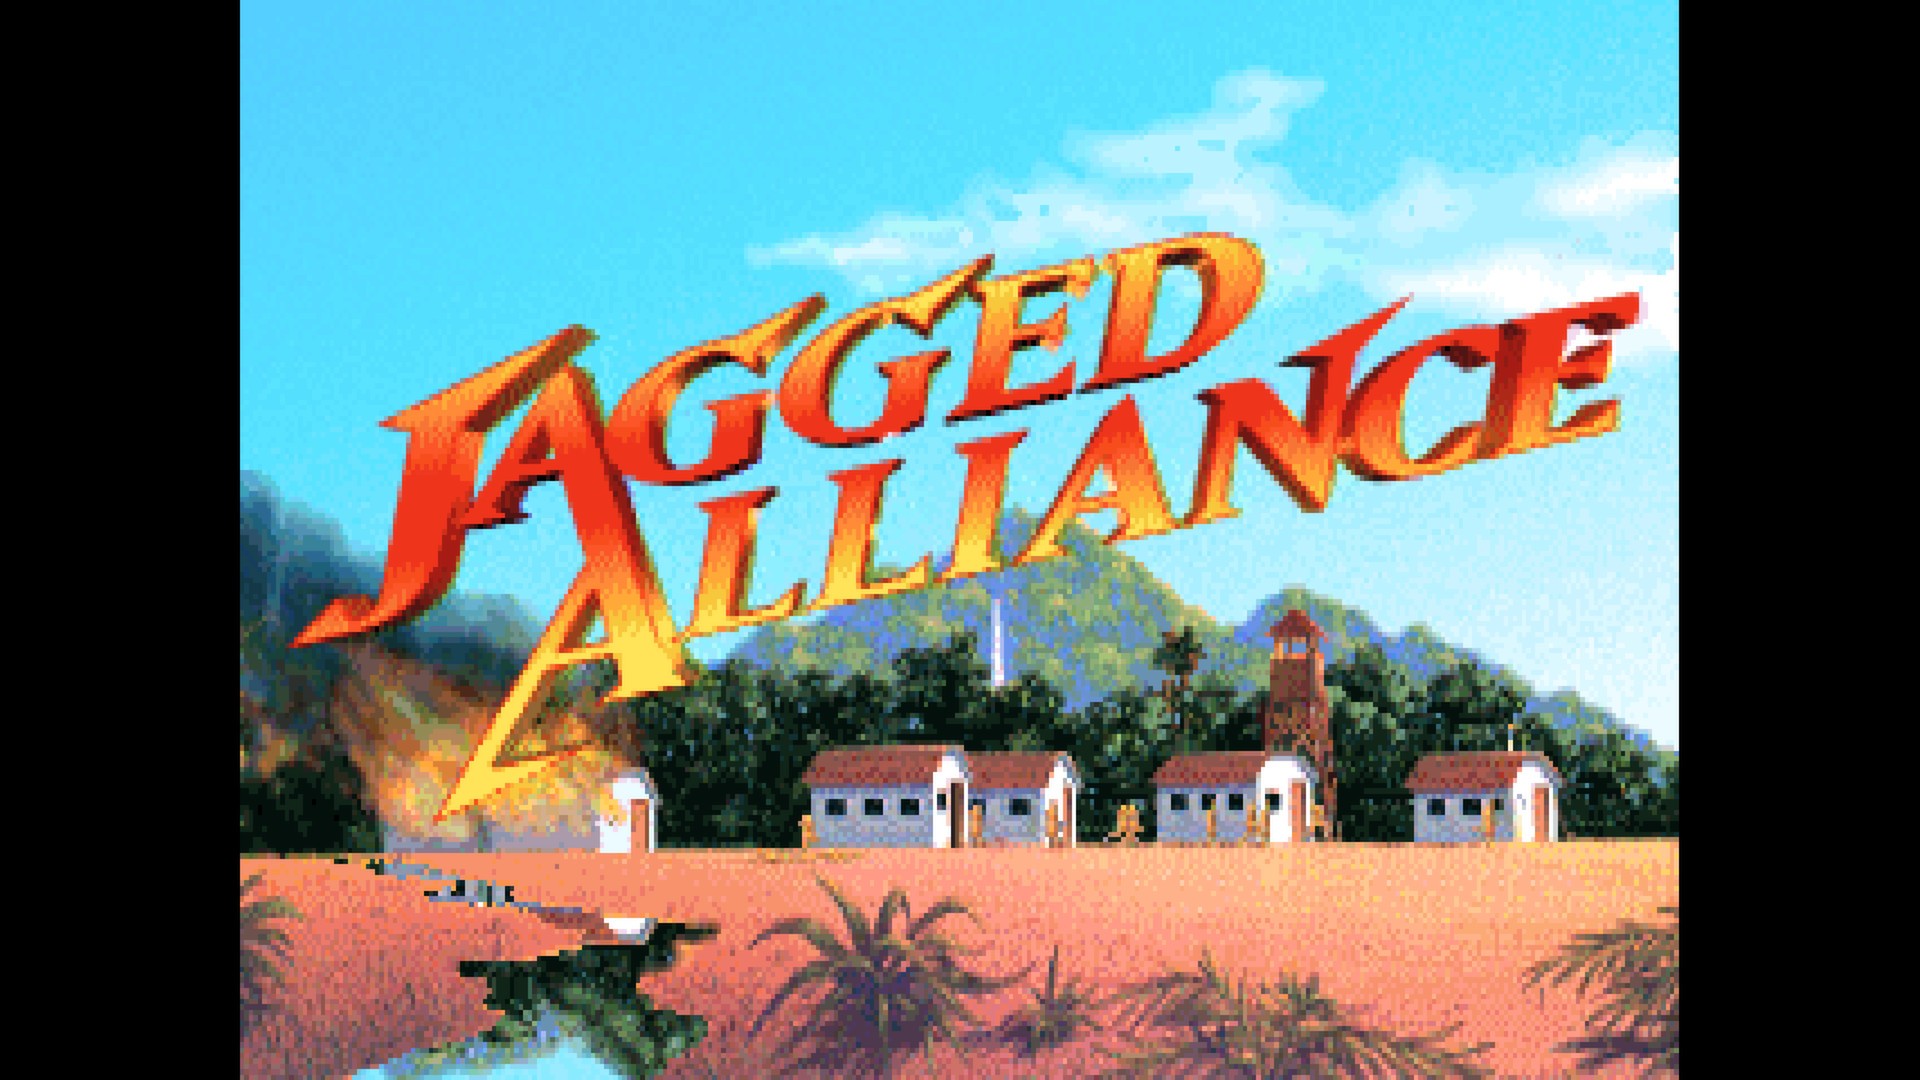 jagged alliance 2 gold 1.12 file editor